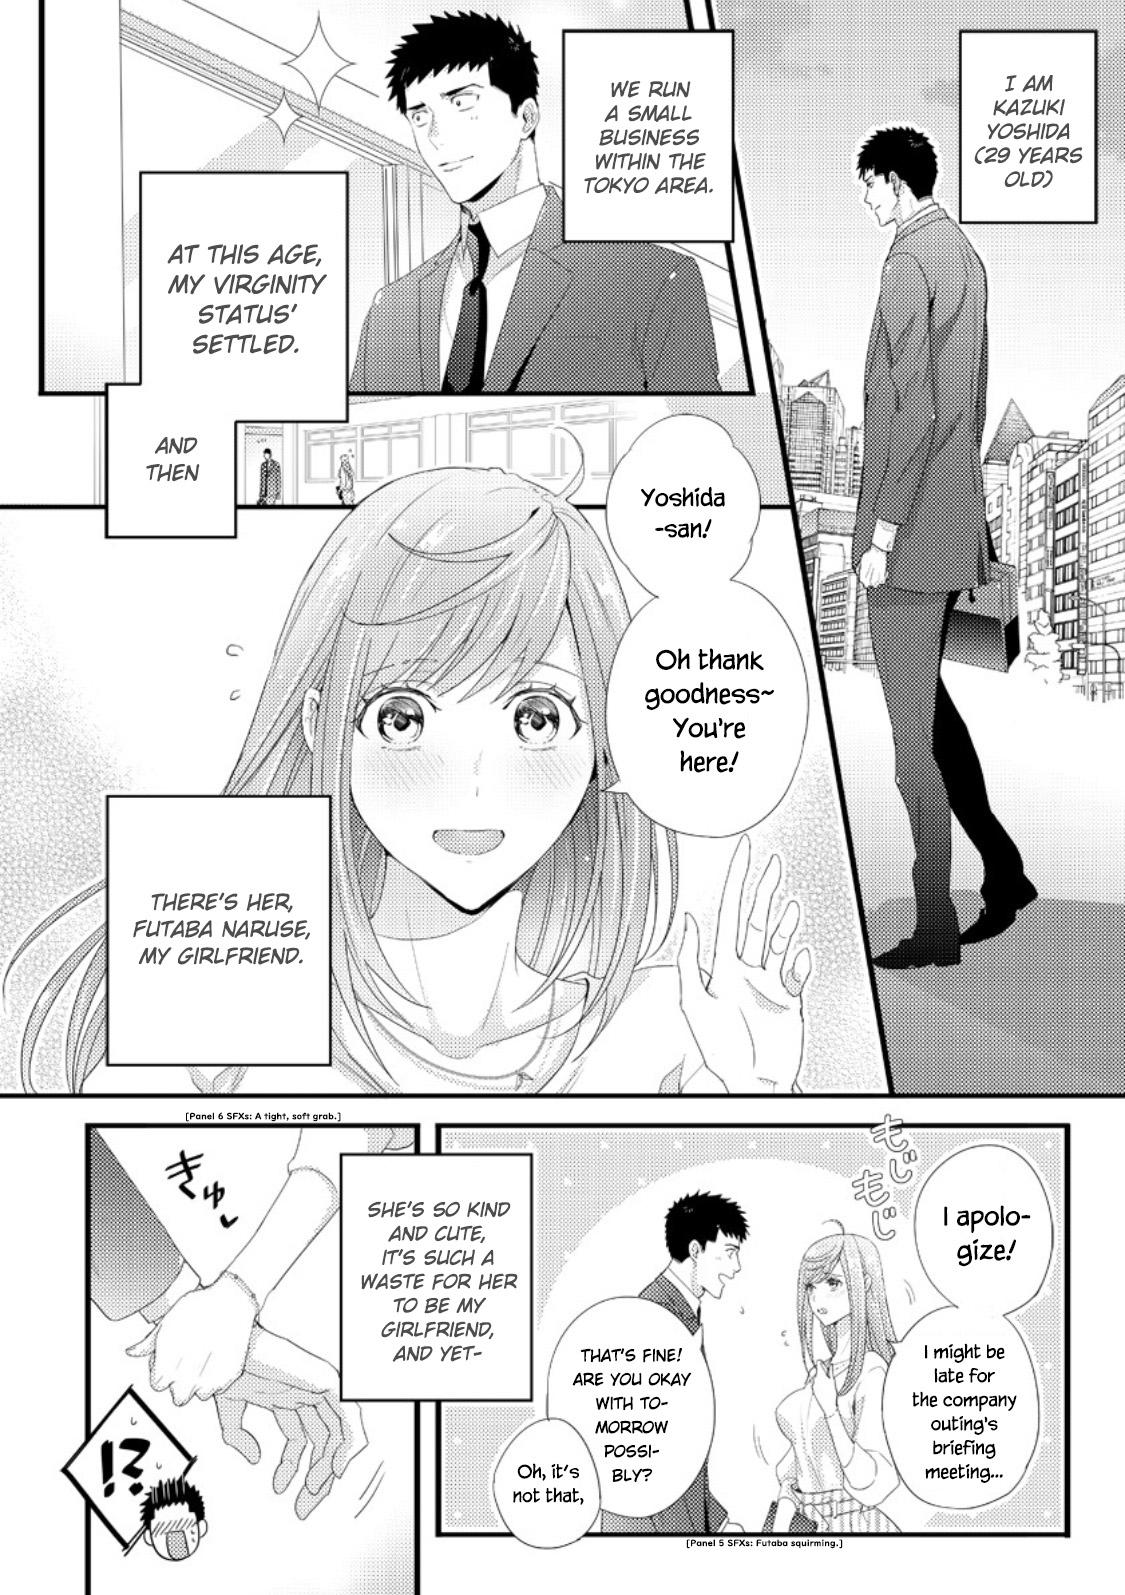 Puto Please Let Me Hold You Futaba-san! Swedish - Page 2